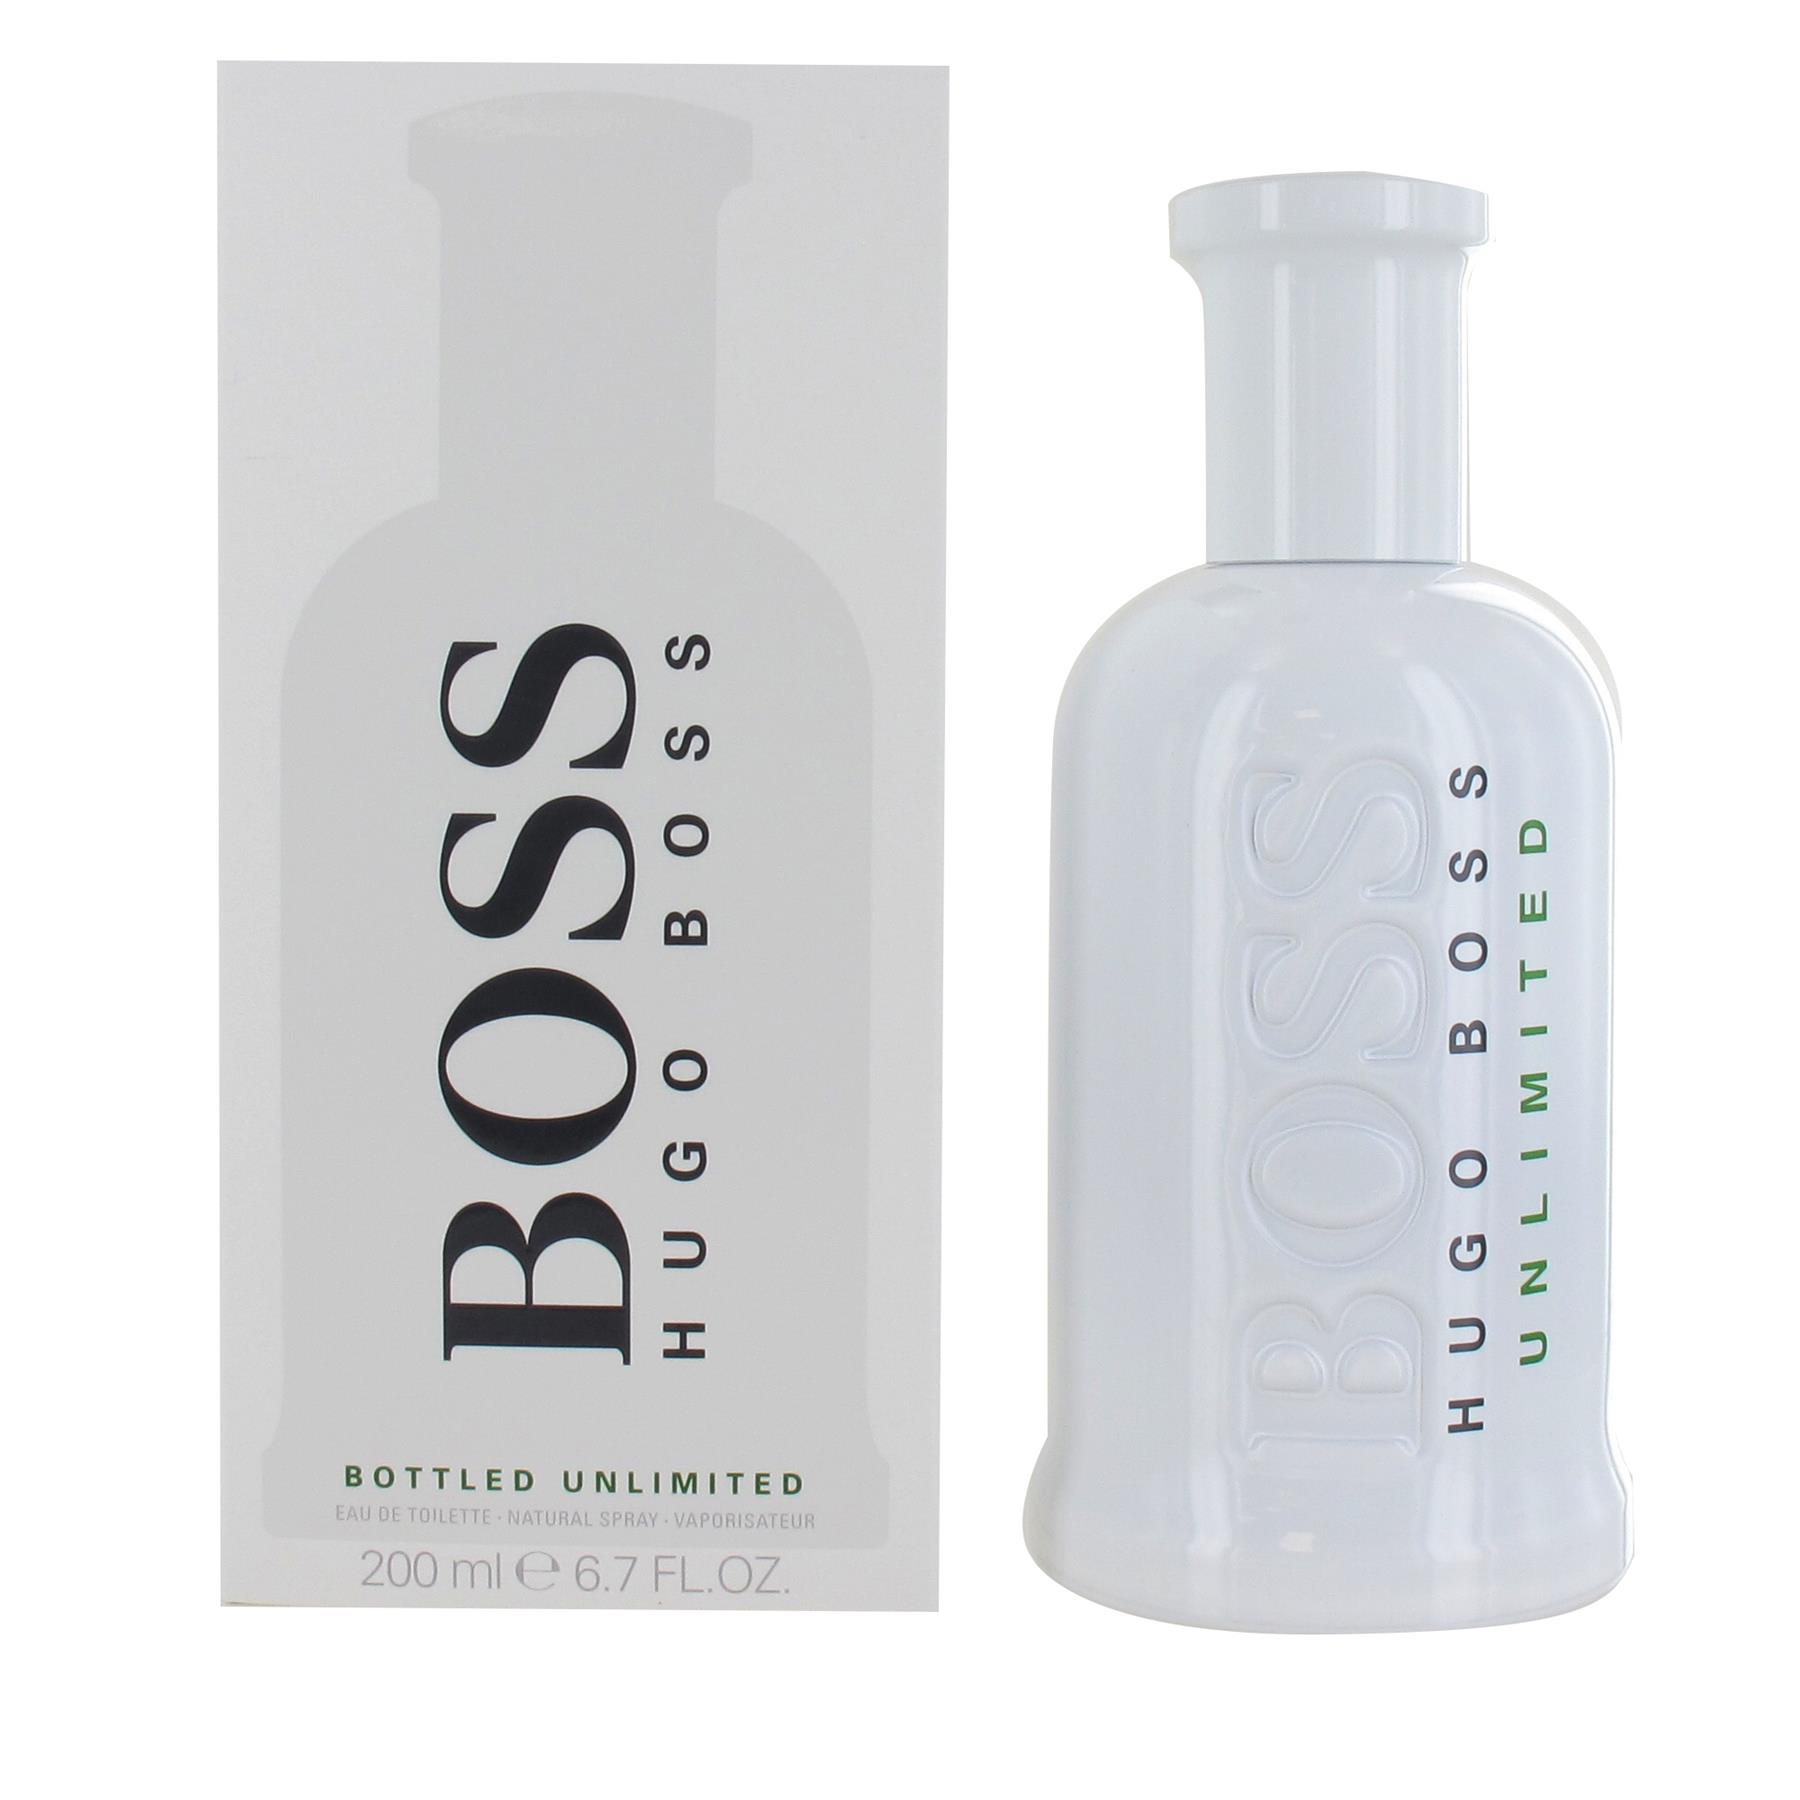 Hugo Boss Boss Bottled Unlimited Eau de Toilette 200ml Spray for Him from Perfume Plus Direct